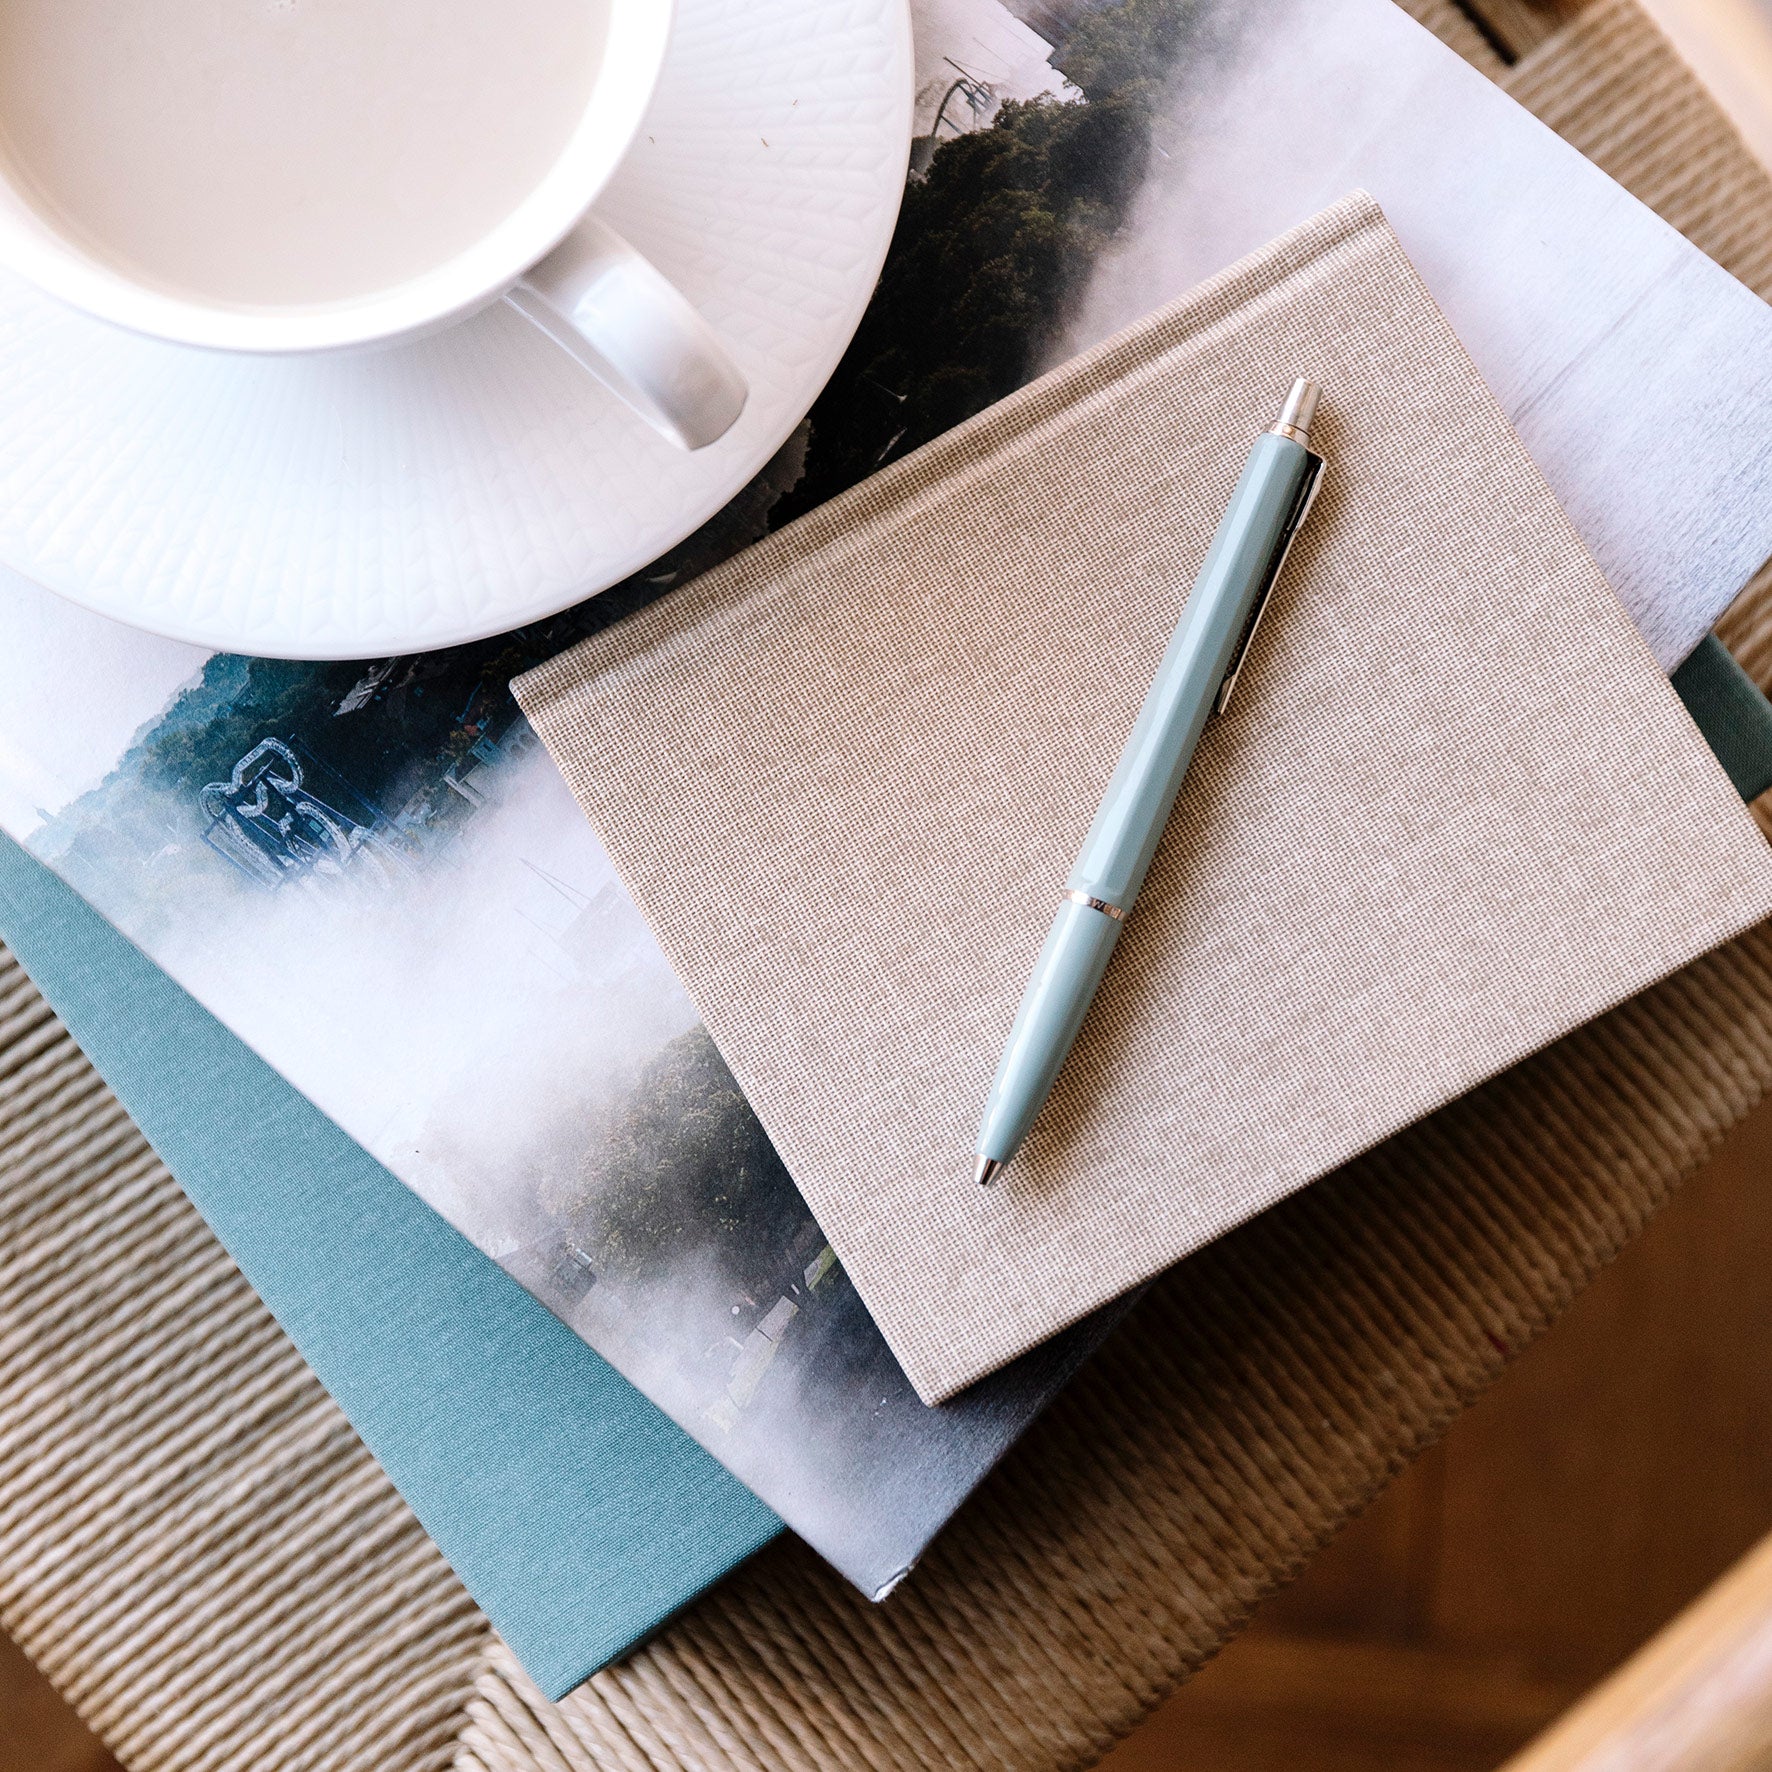 Bookbinders Design - Cloth Notebook - Regular - Green